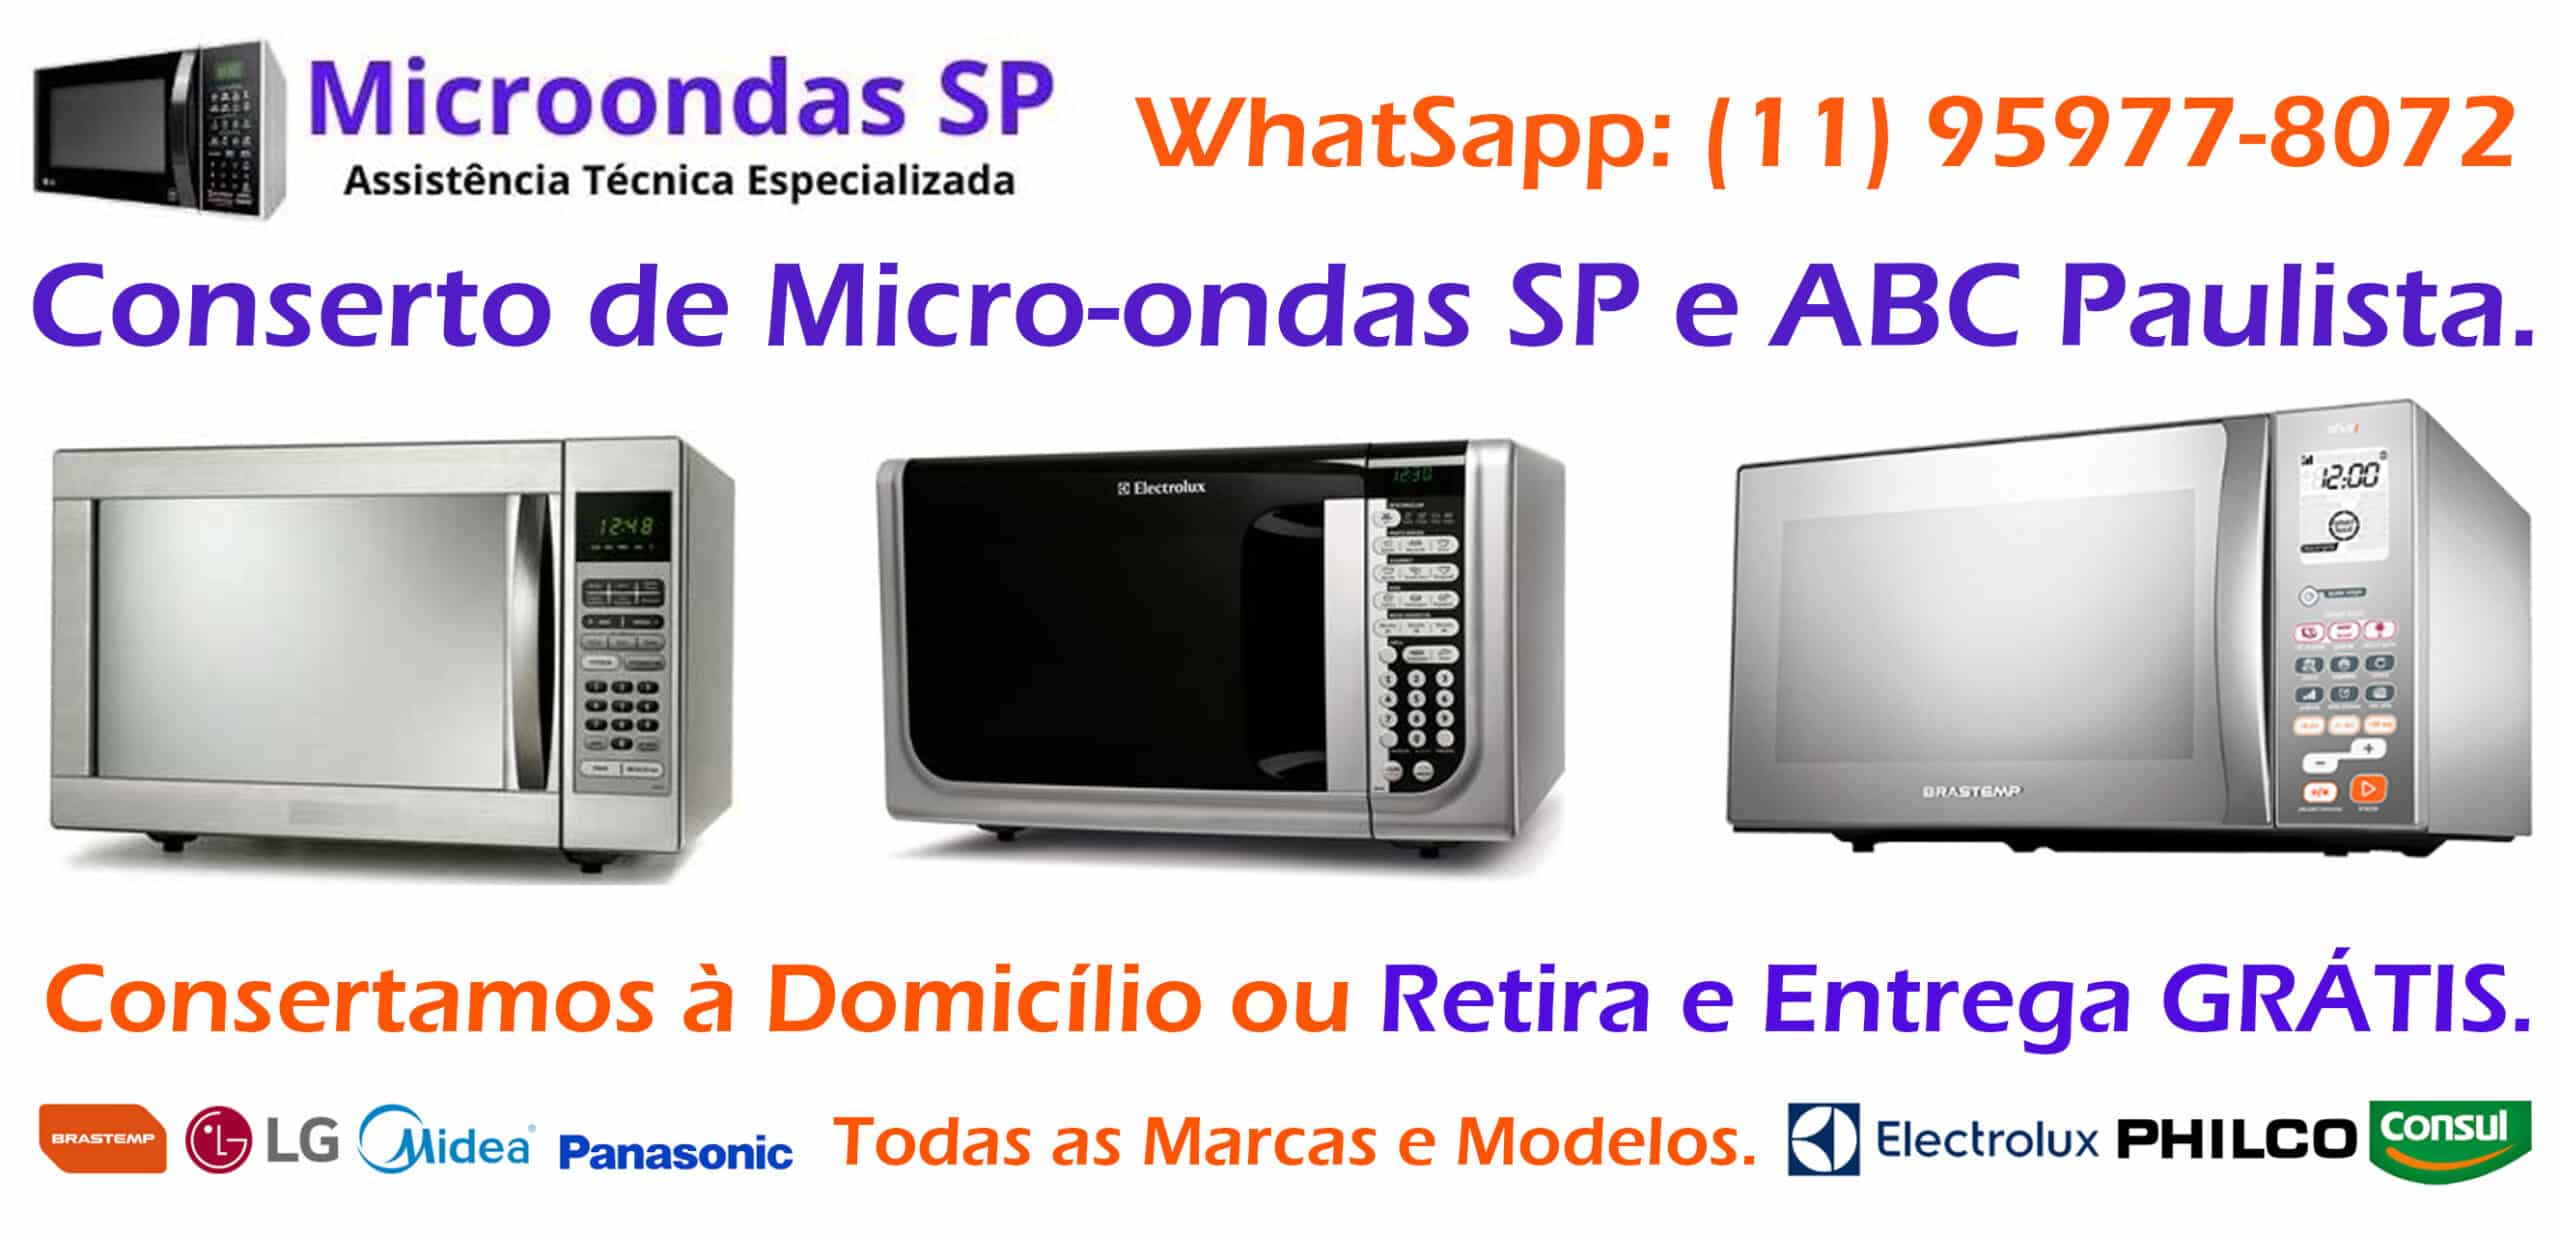 Conserto-Micro-ondas-SP-e-ABC-Paulista-scaled Conserto Micro-ondas Santo André